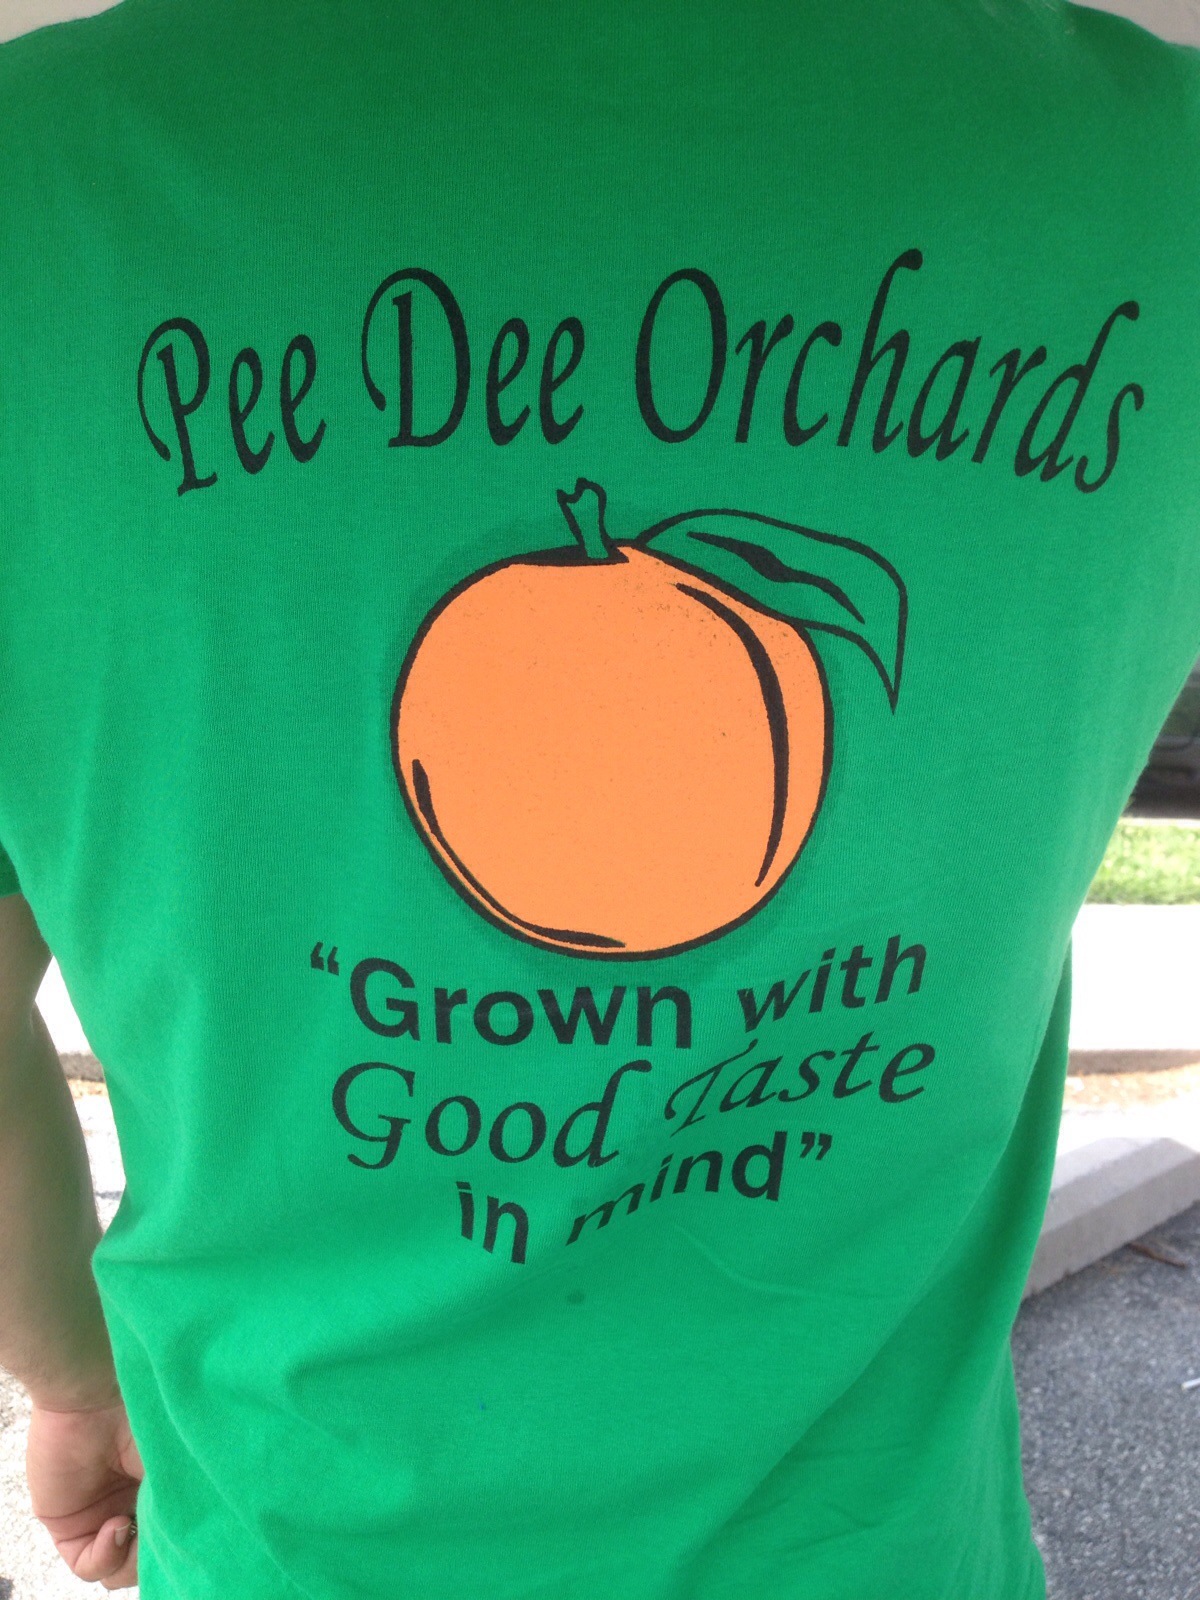 Pee-Dee-Orchards.jpg